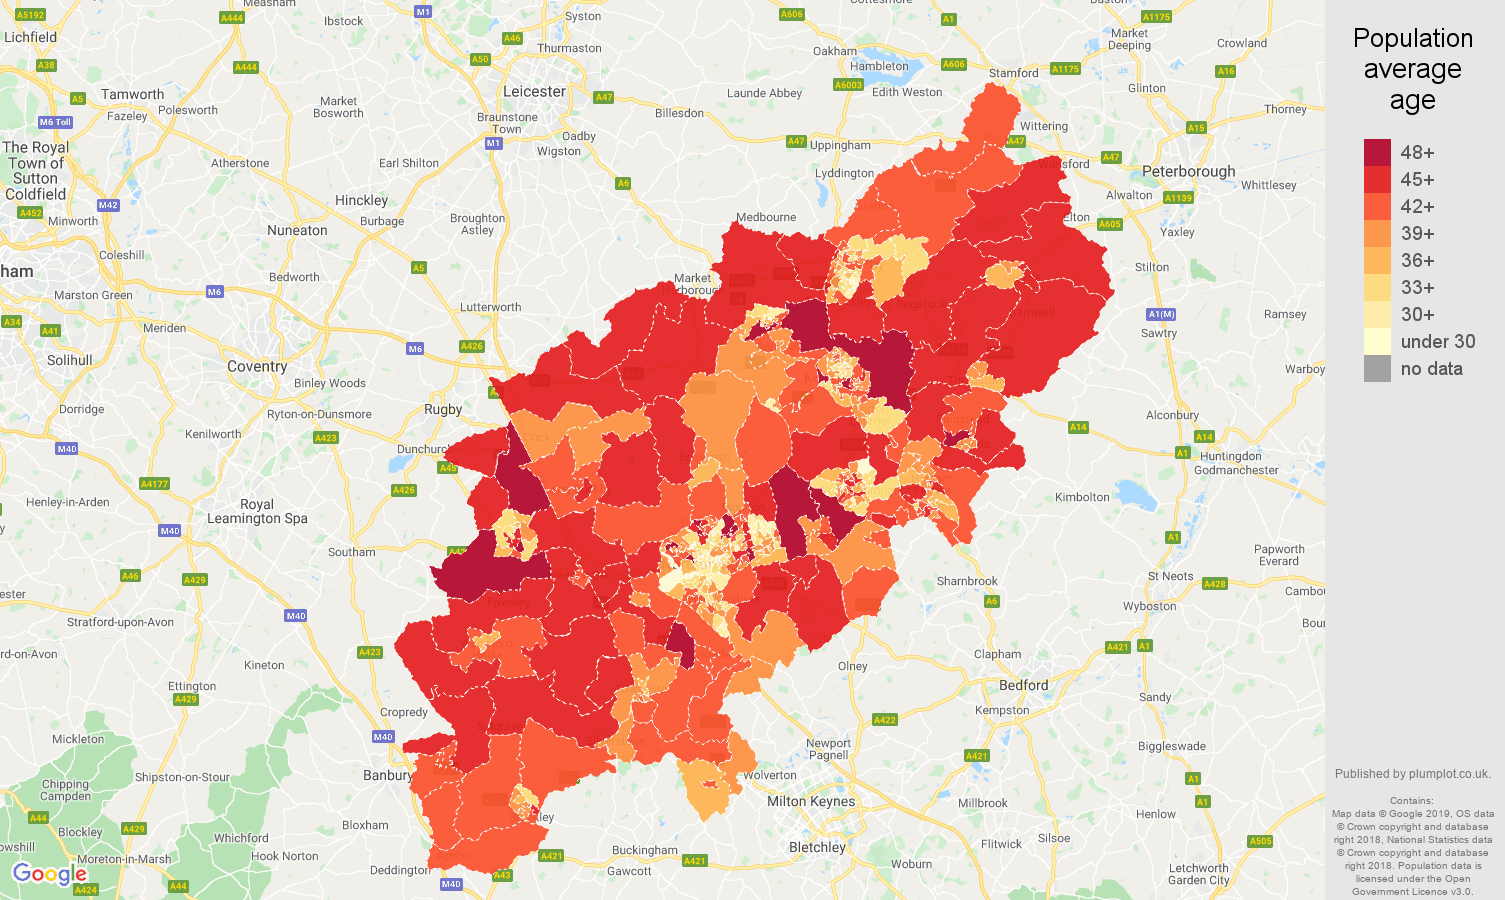 Northamptonshire population average age map